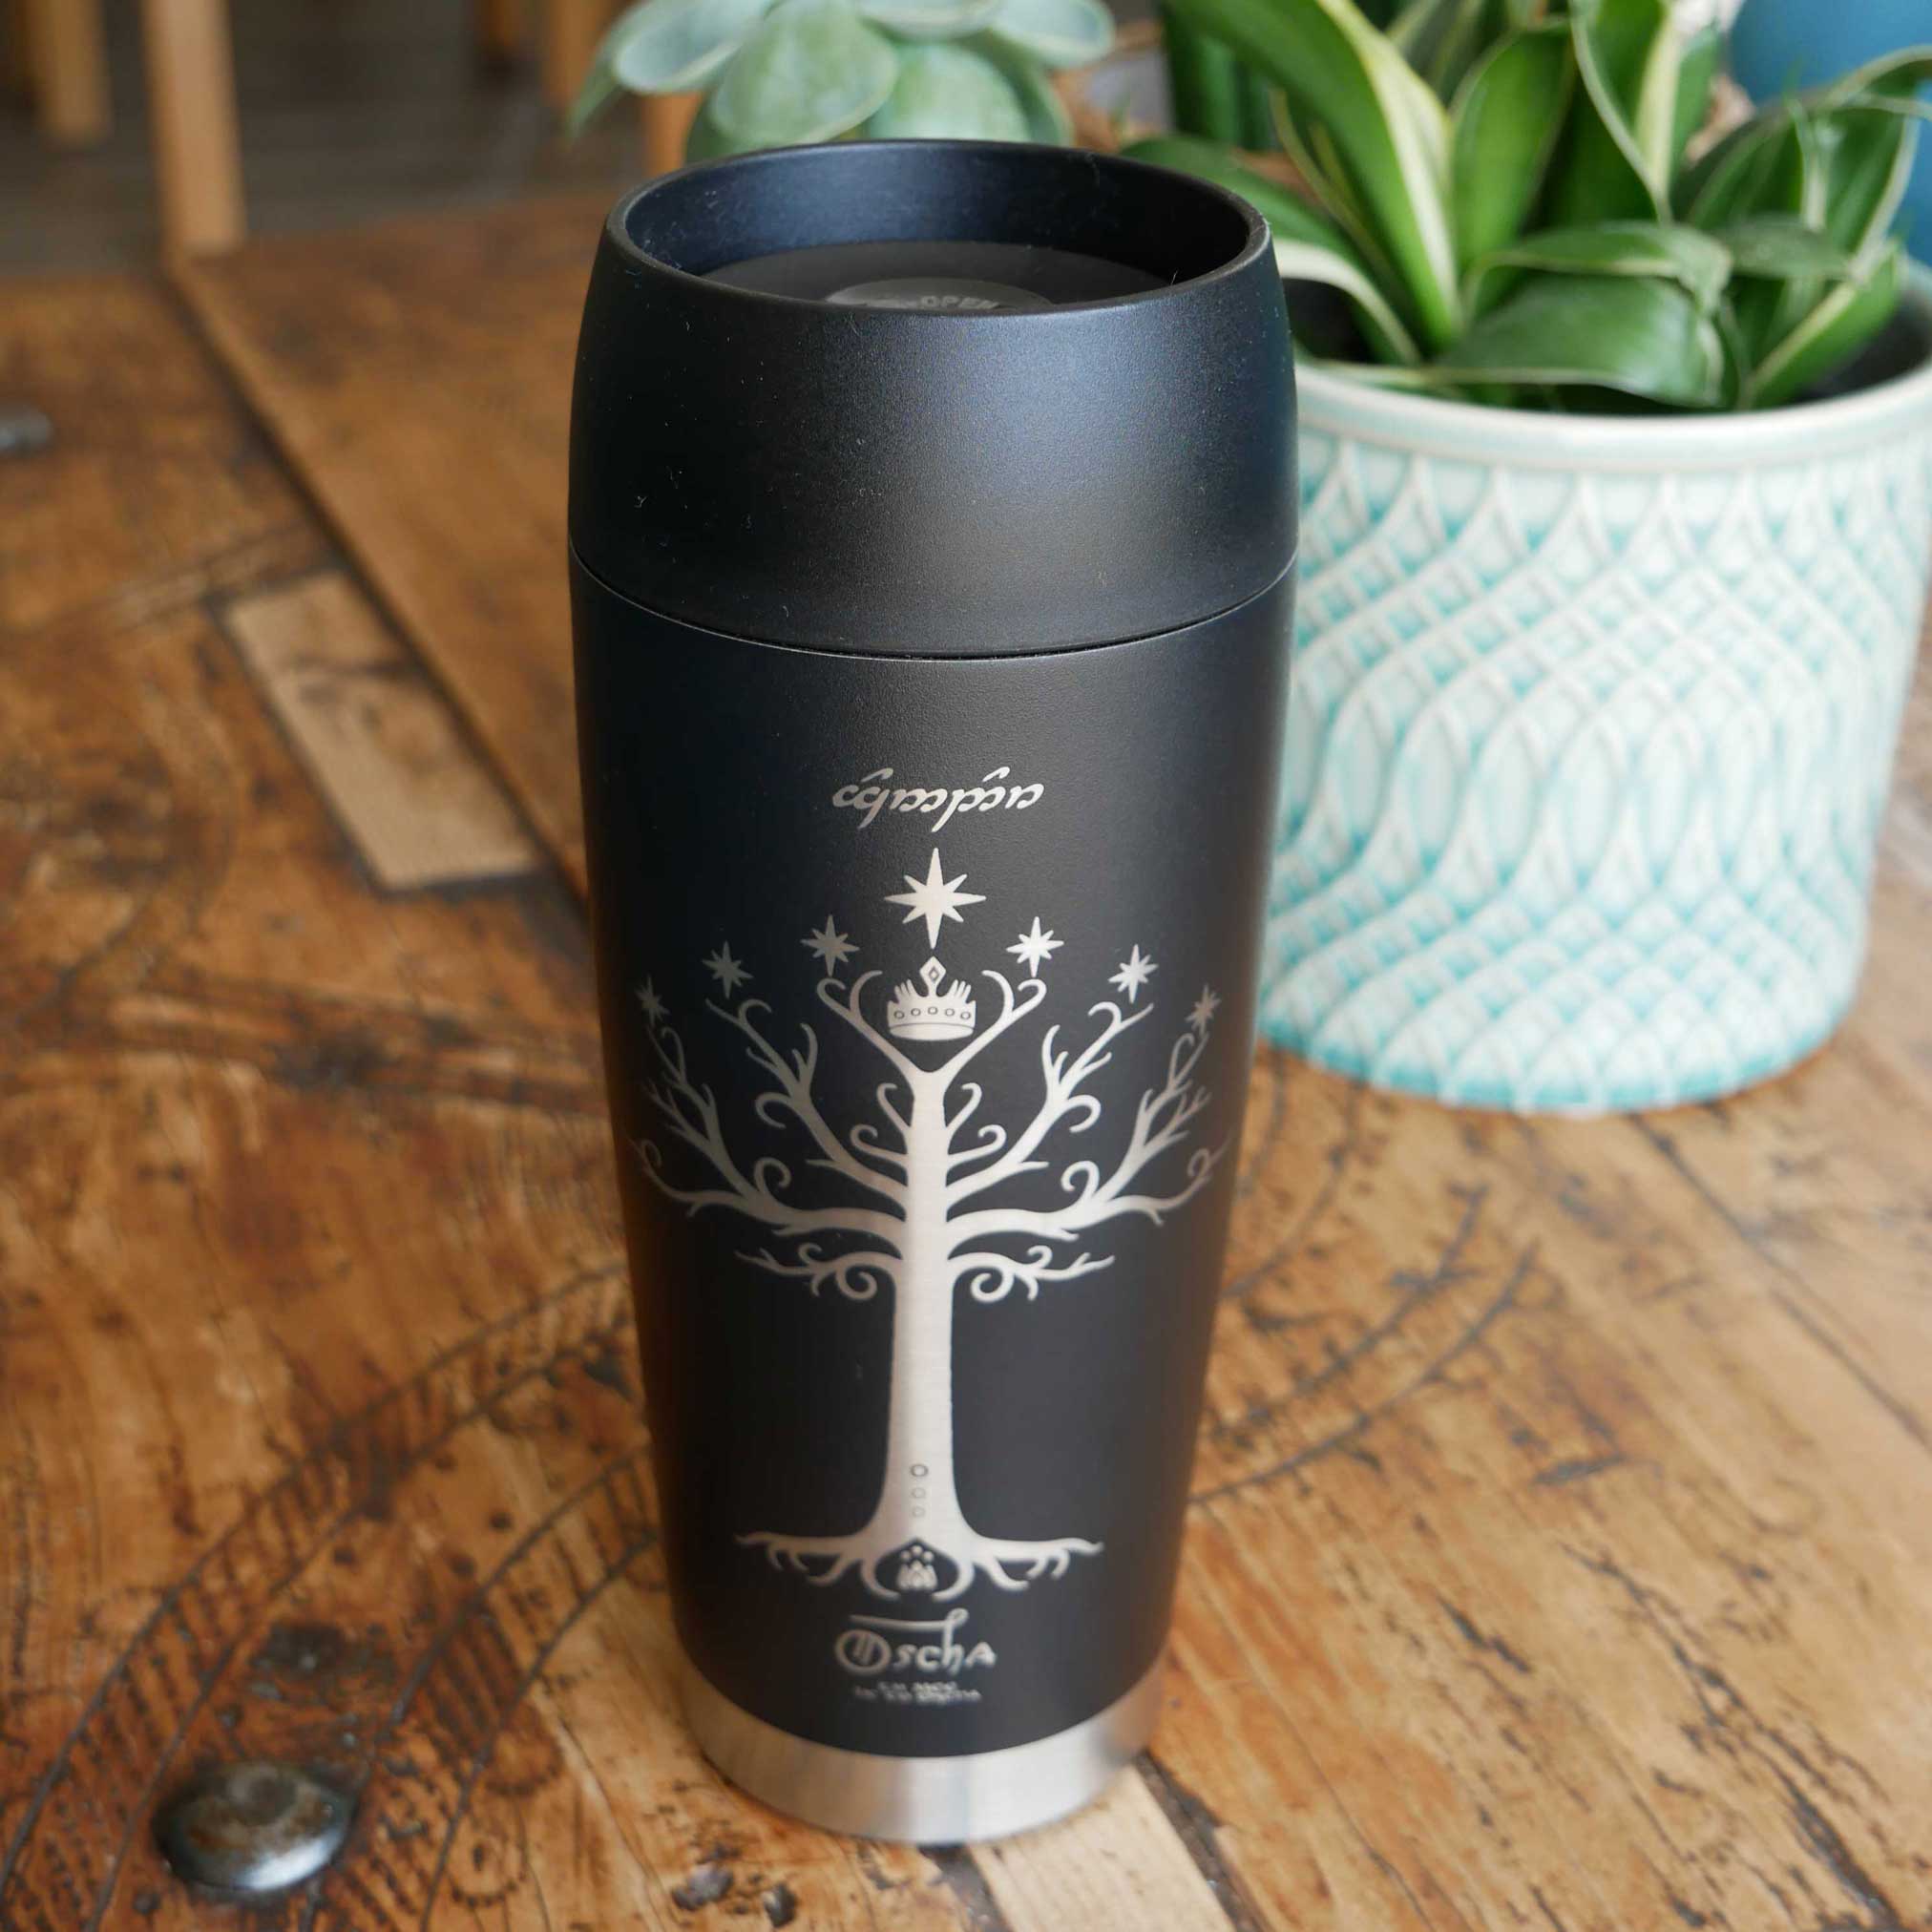 Moon 360° Travel Mug - Insulated Travel Coffee Mugs UK – Moon Bottles